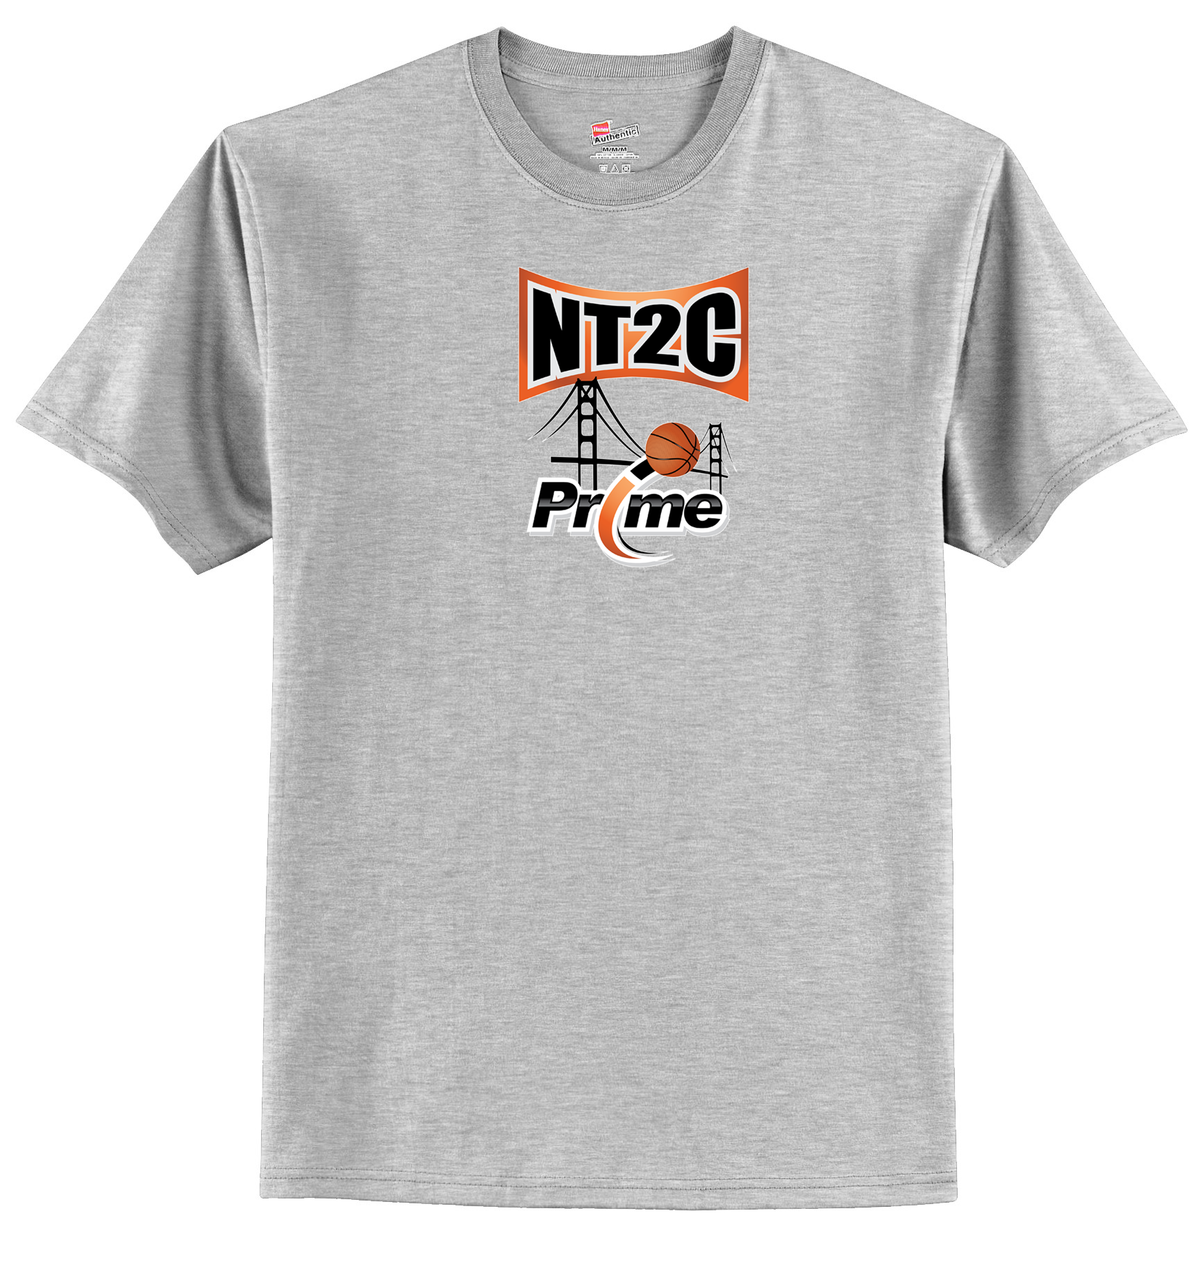 NT2C Prime Basketball T-Shirt